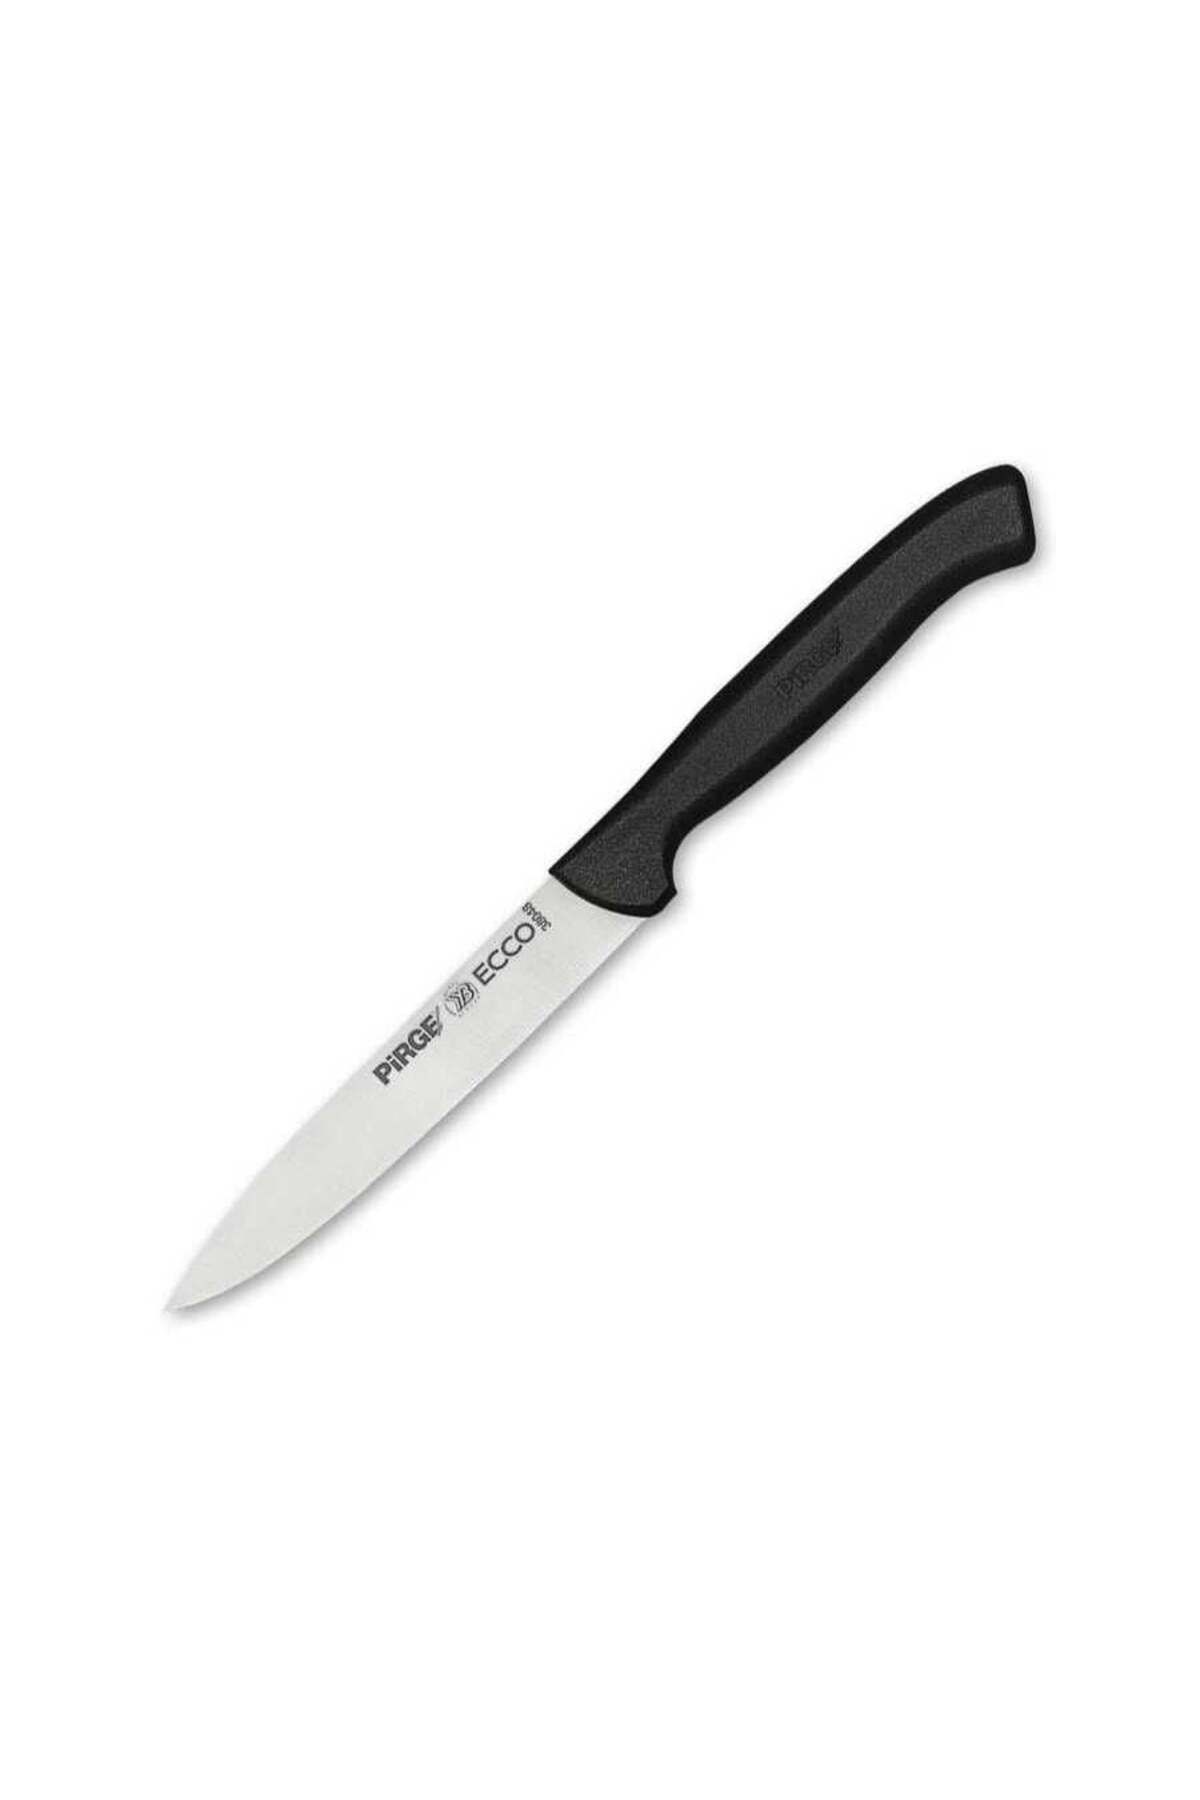 Pirge Pirge Ecco Sivri Sebze Bıçağı 12 Cm 38048